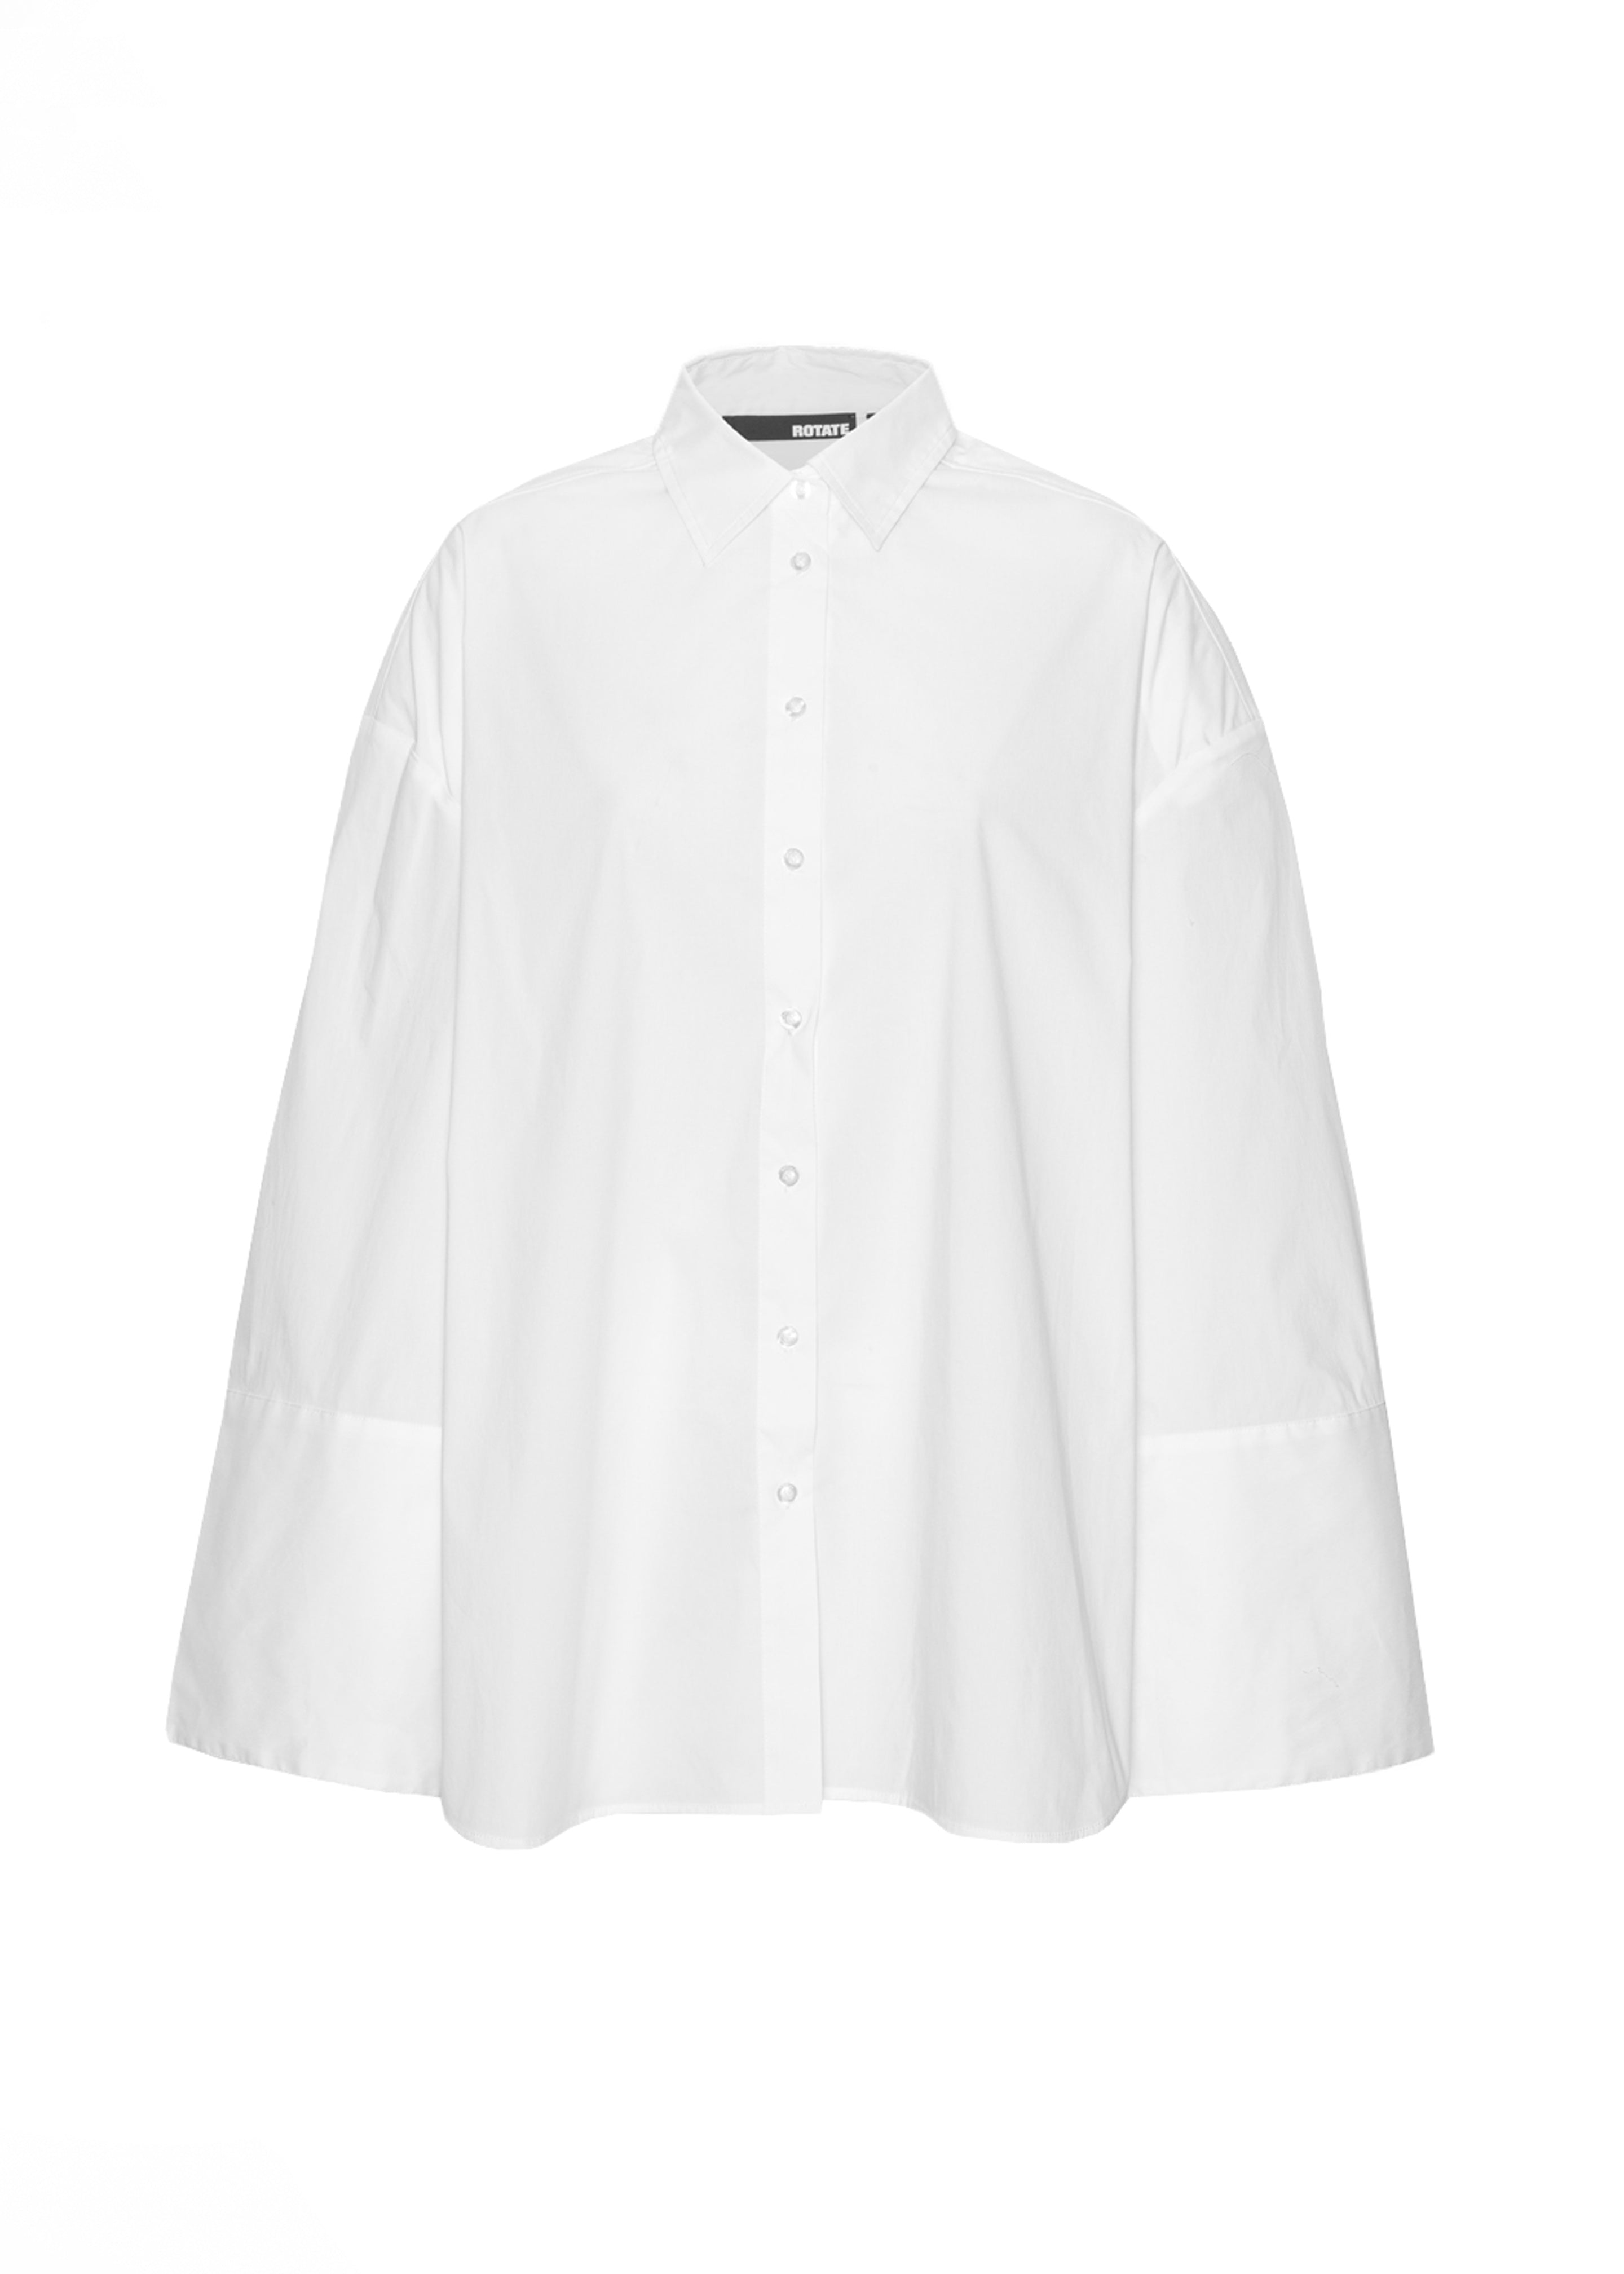 Rotate Oversized Men's Shirt - Bright White - 11